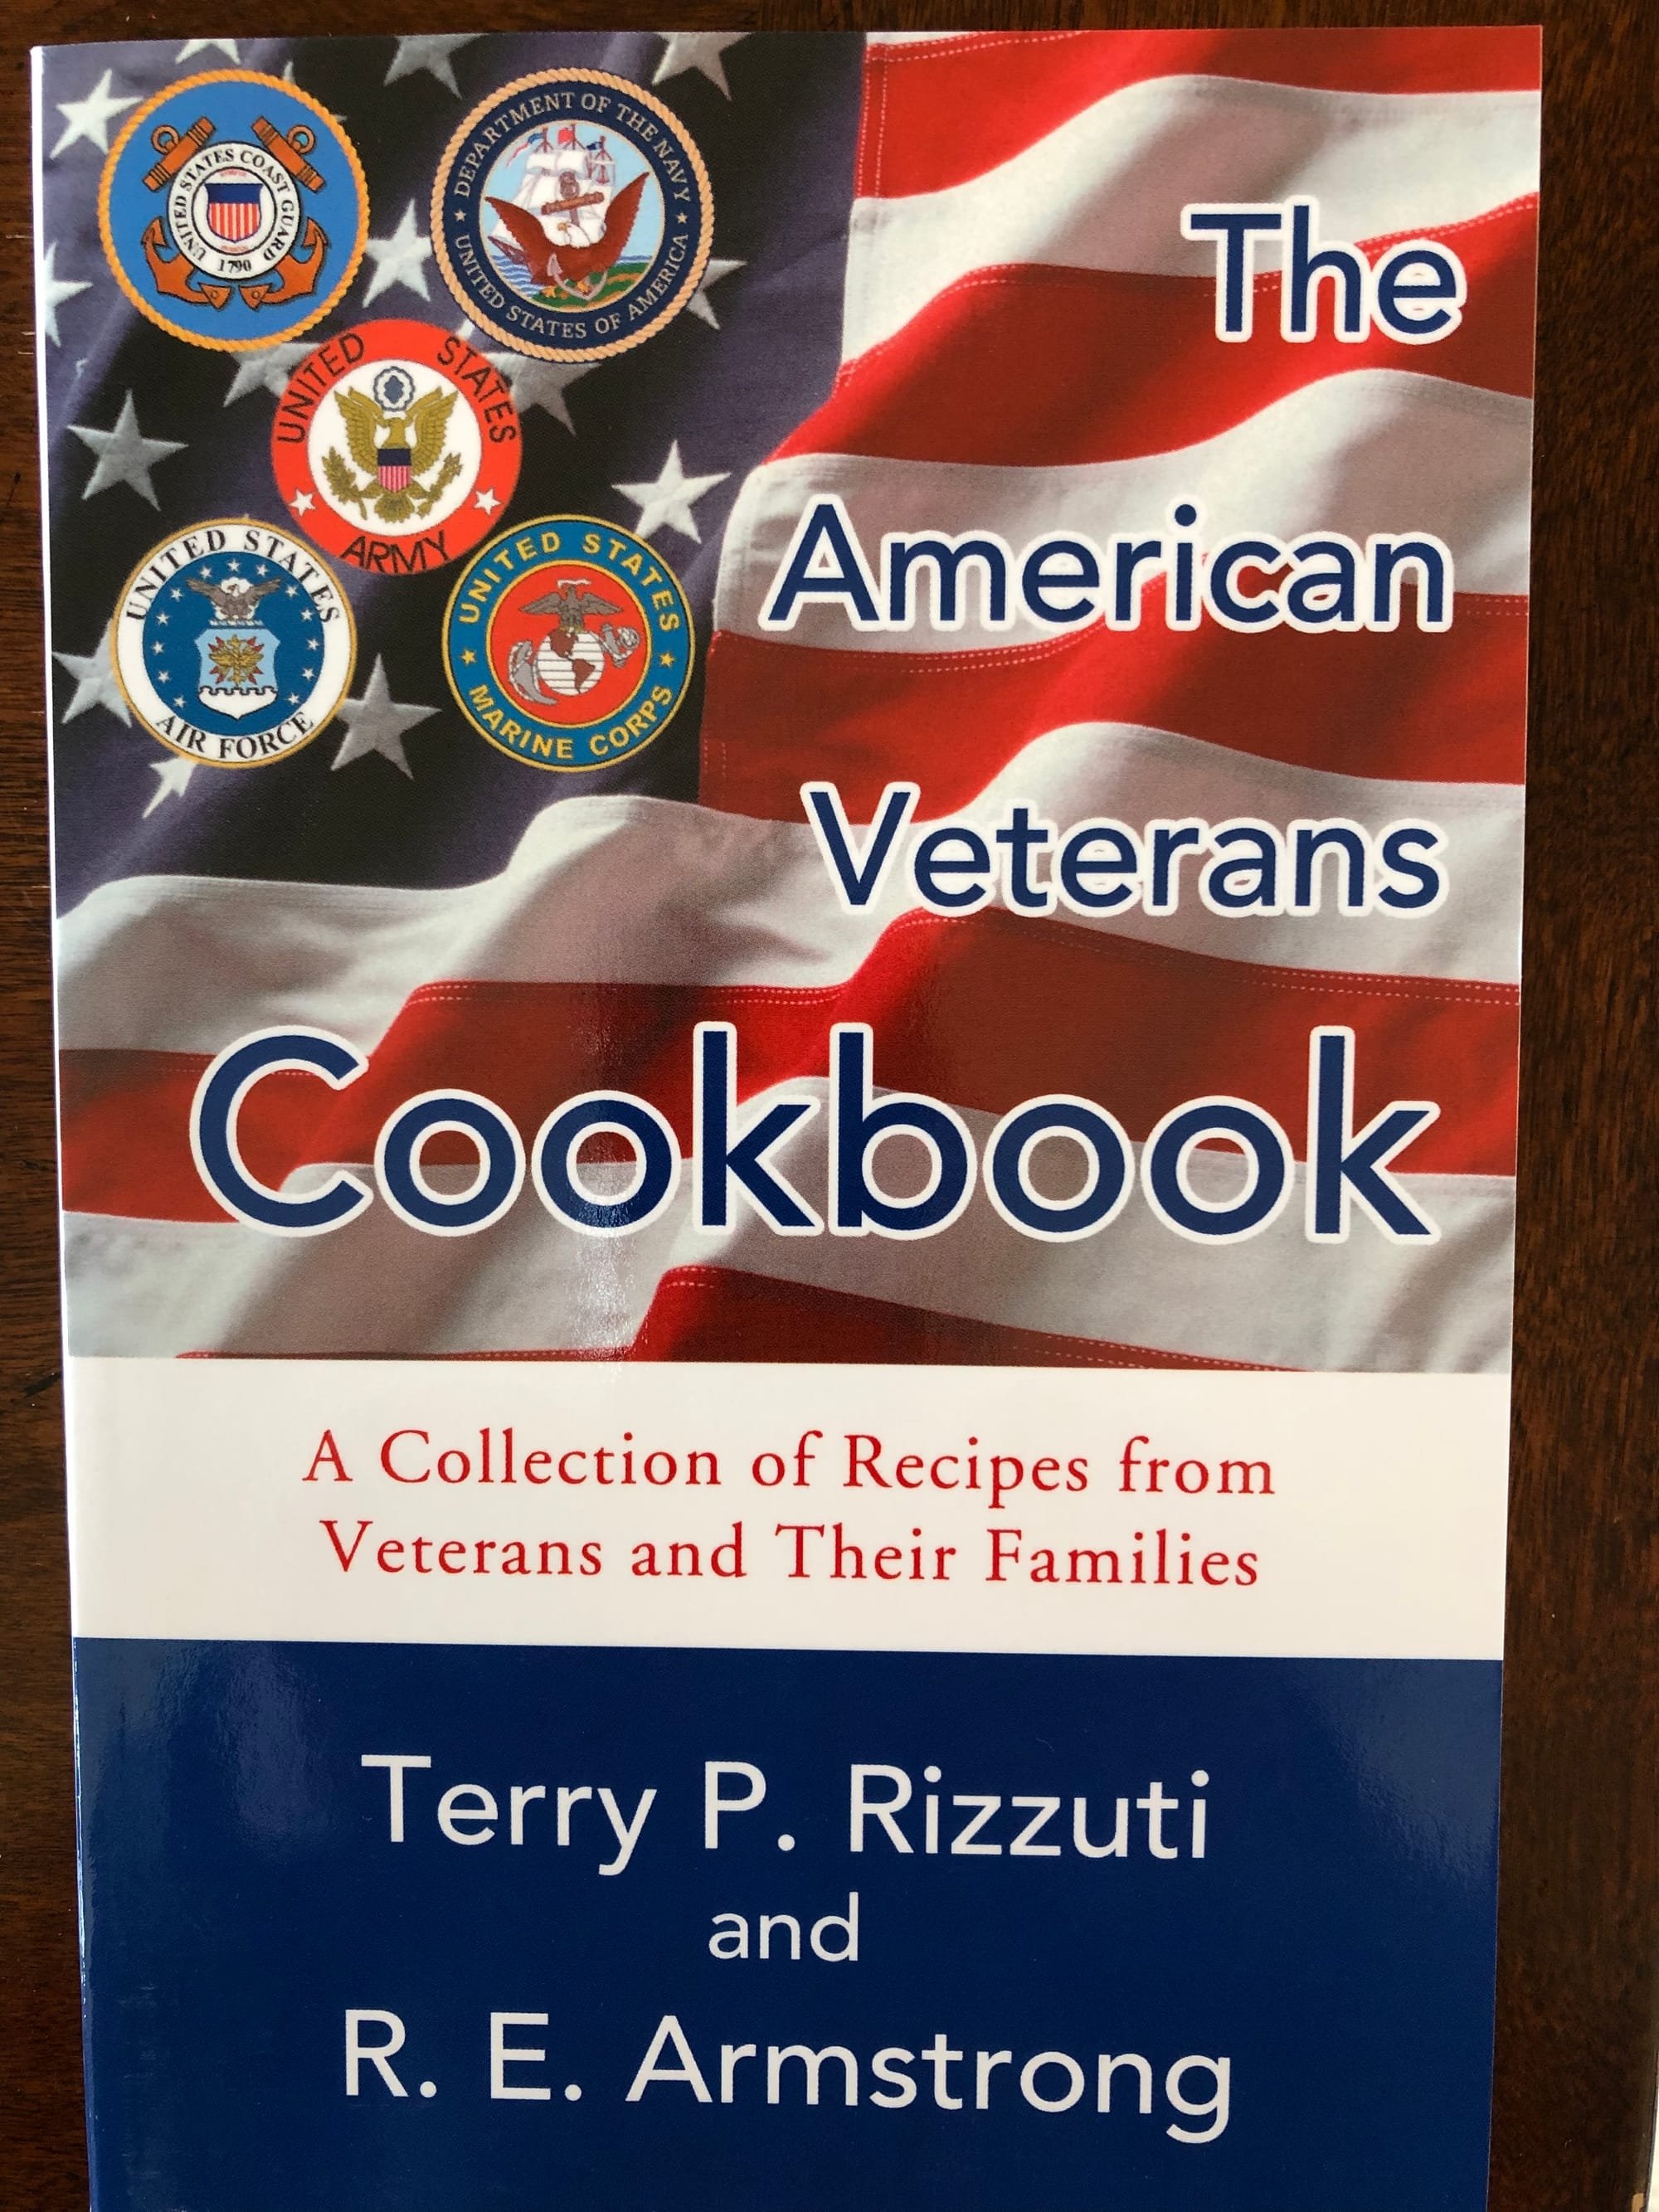 The American Veterans Cookbook